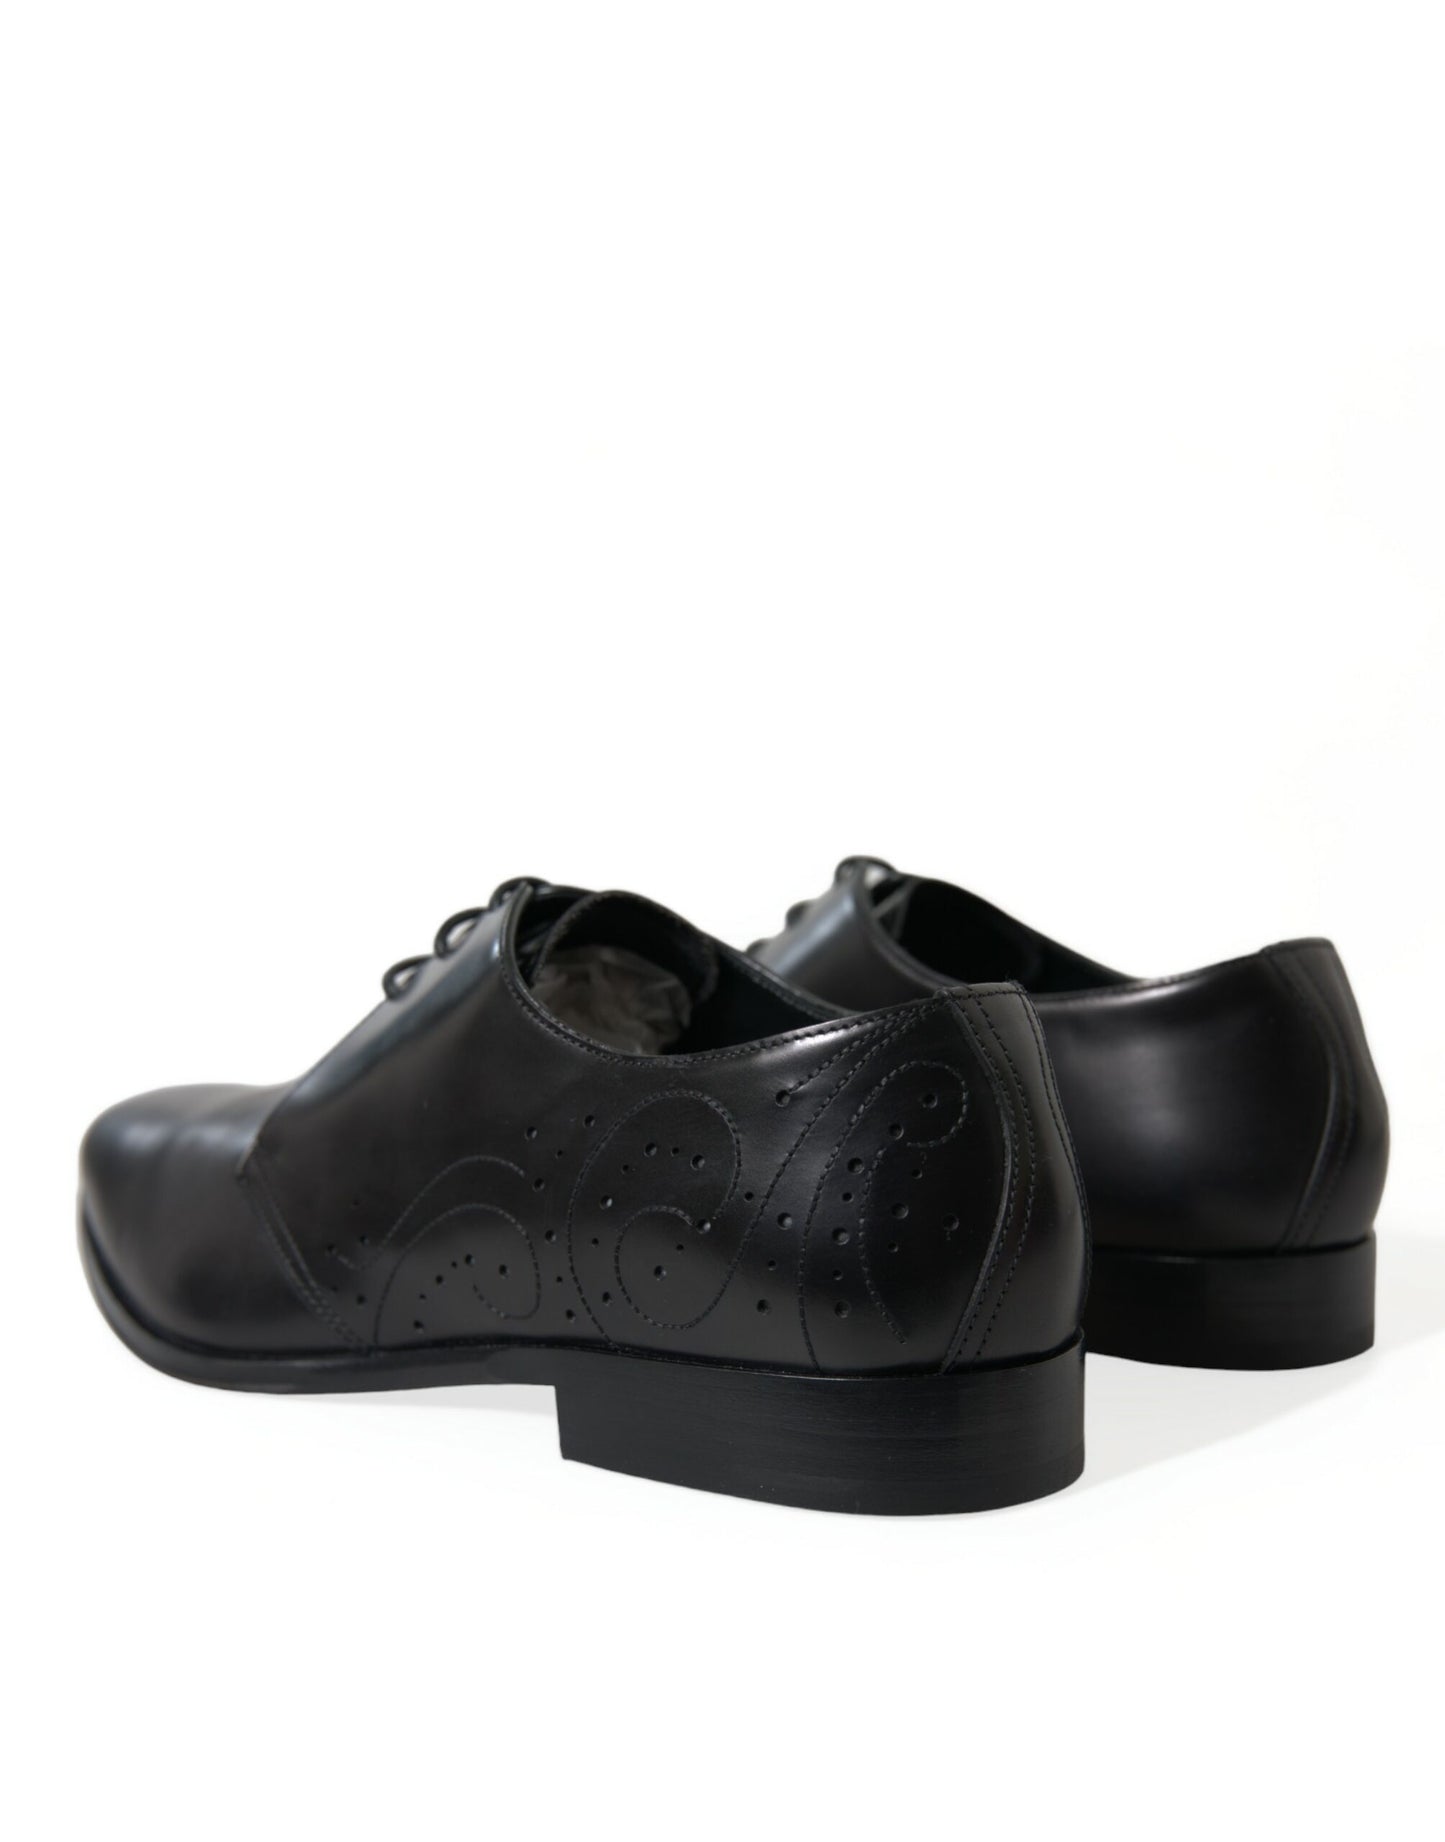 Fashionsarah.com Fashionsarah.com Dolce & Gabbana Black Leather Lace Up Formal Derby Dress Shoes